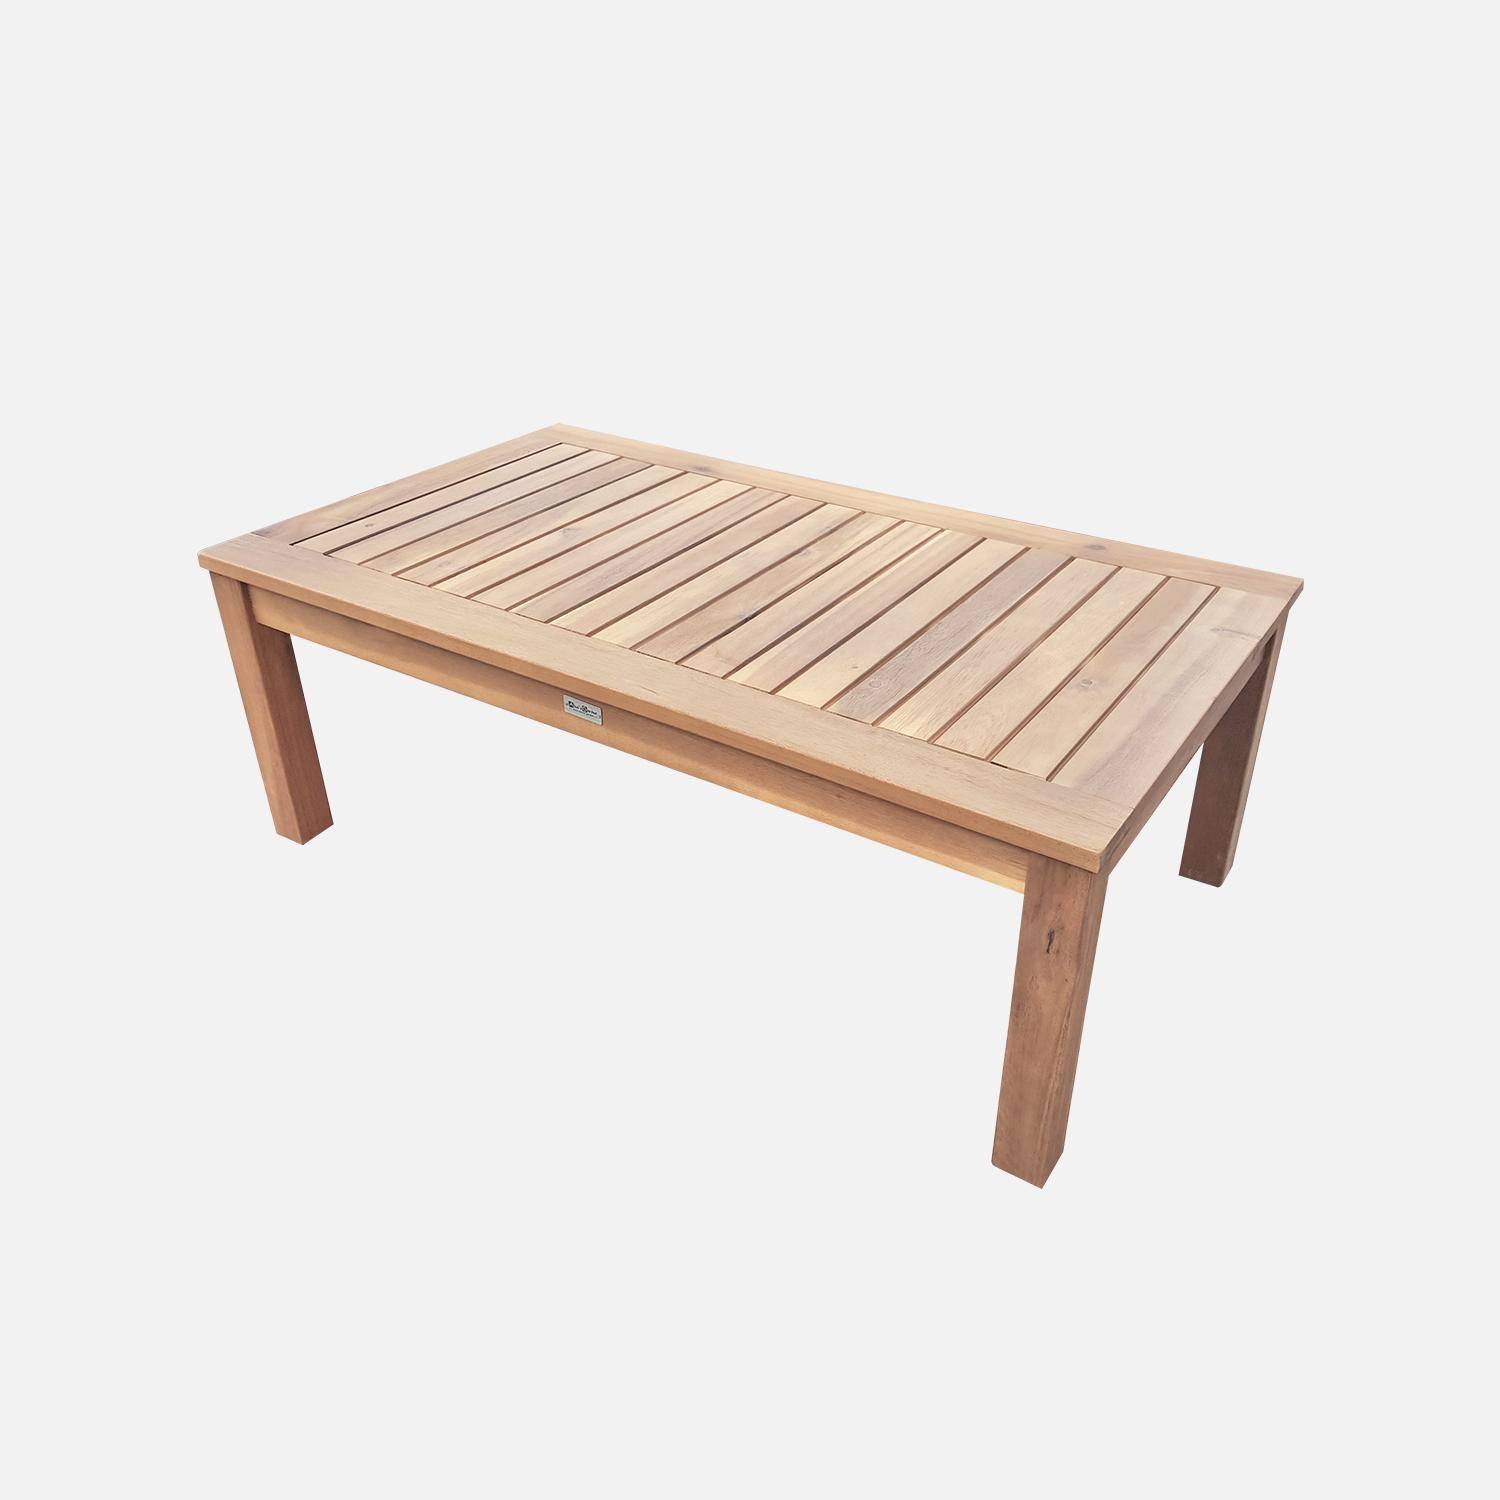 4-seater wooden garden sofa - Acacia wood sofa, armchairs and coffee table, designer piece  - Ushuaia - Off-white Photo5